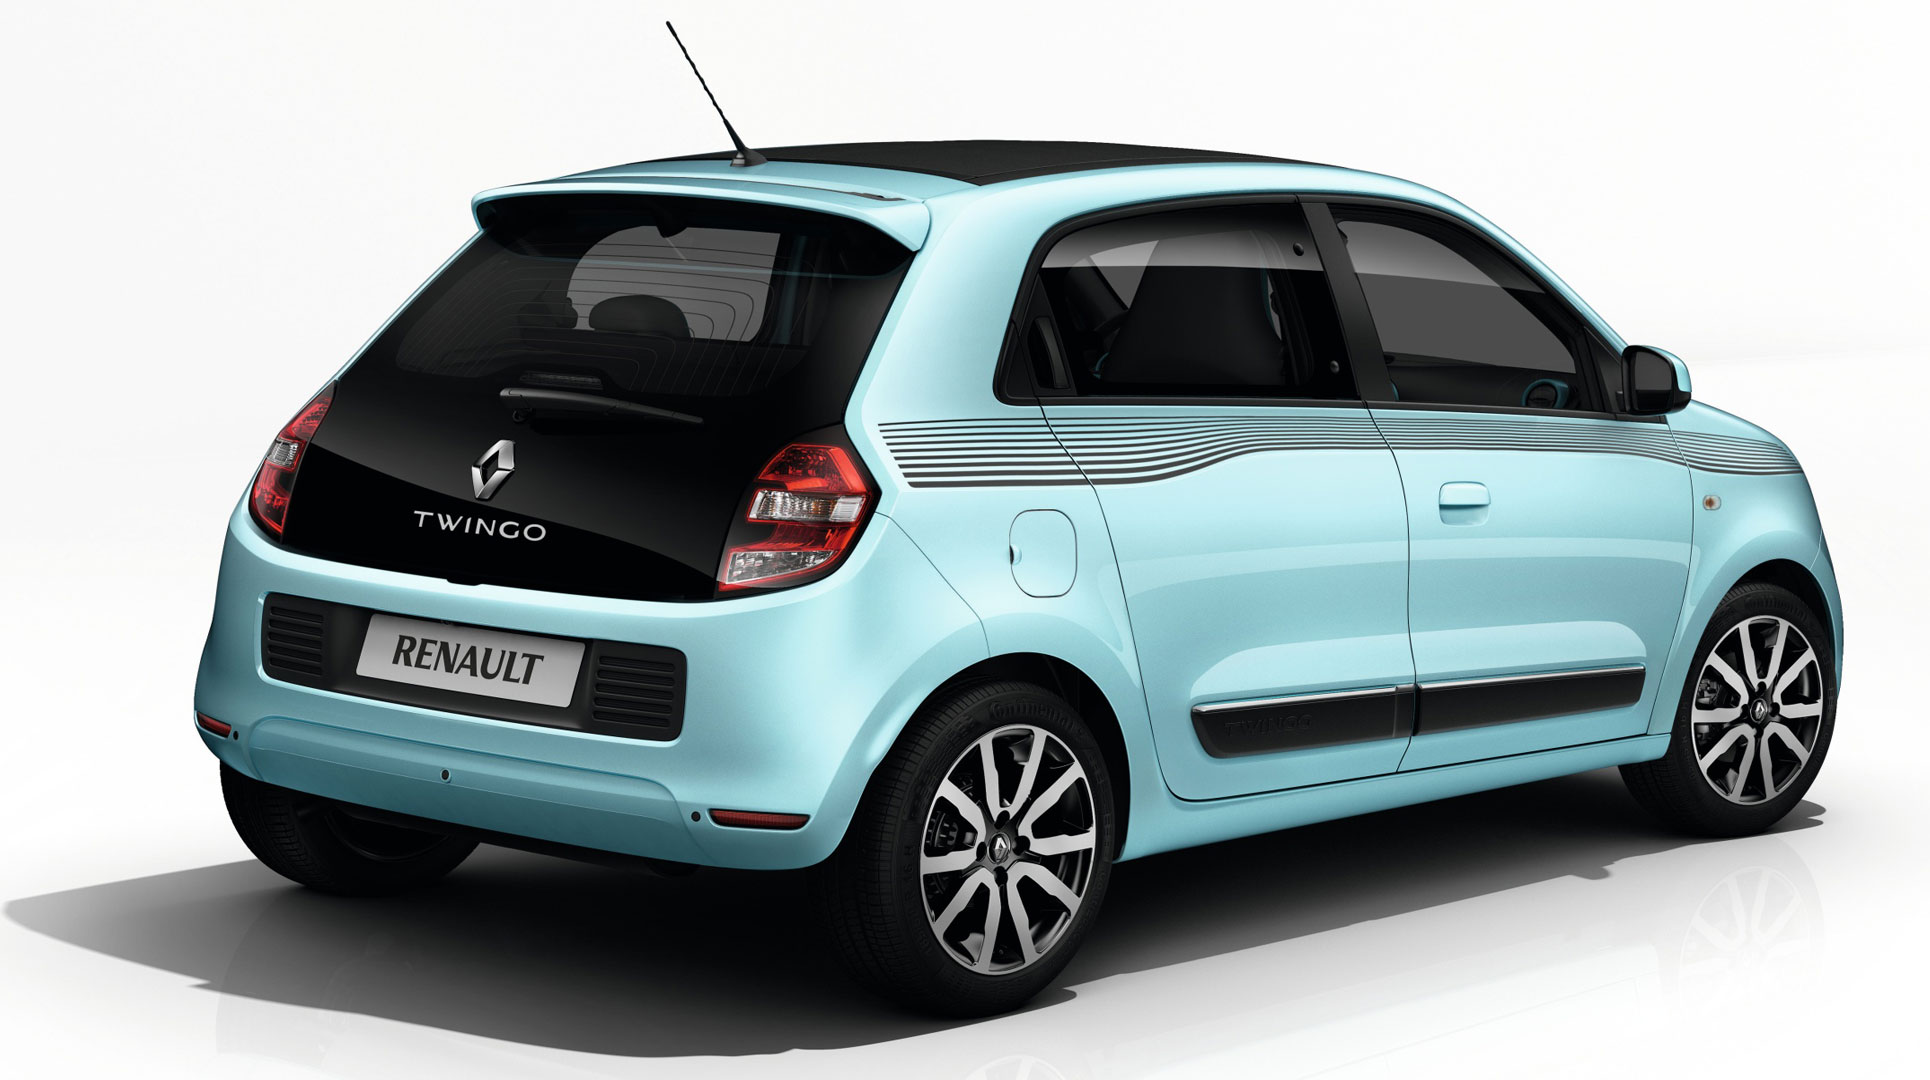 Renault Twingo Play rear cross view